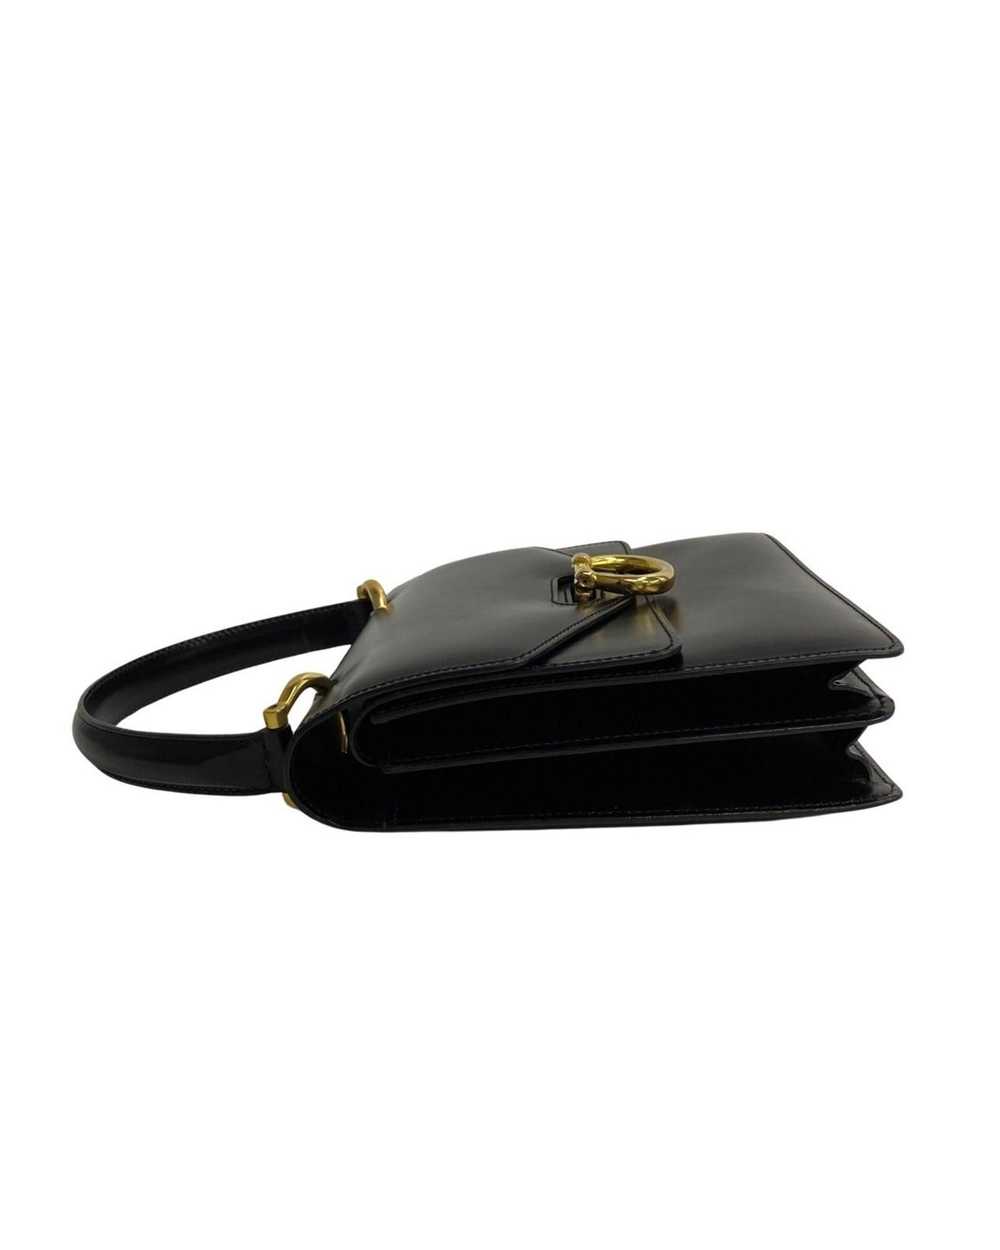 Celine Black Pony-style Calfskin Handbag - image 5